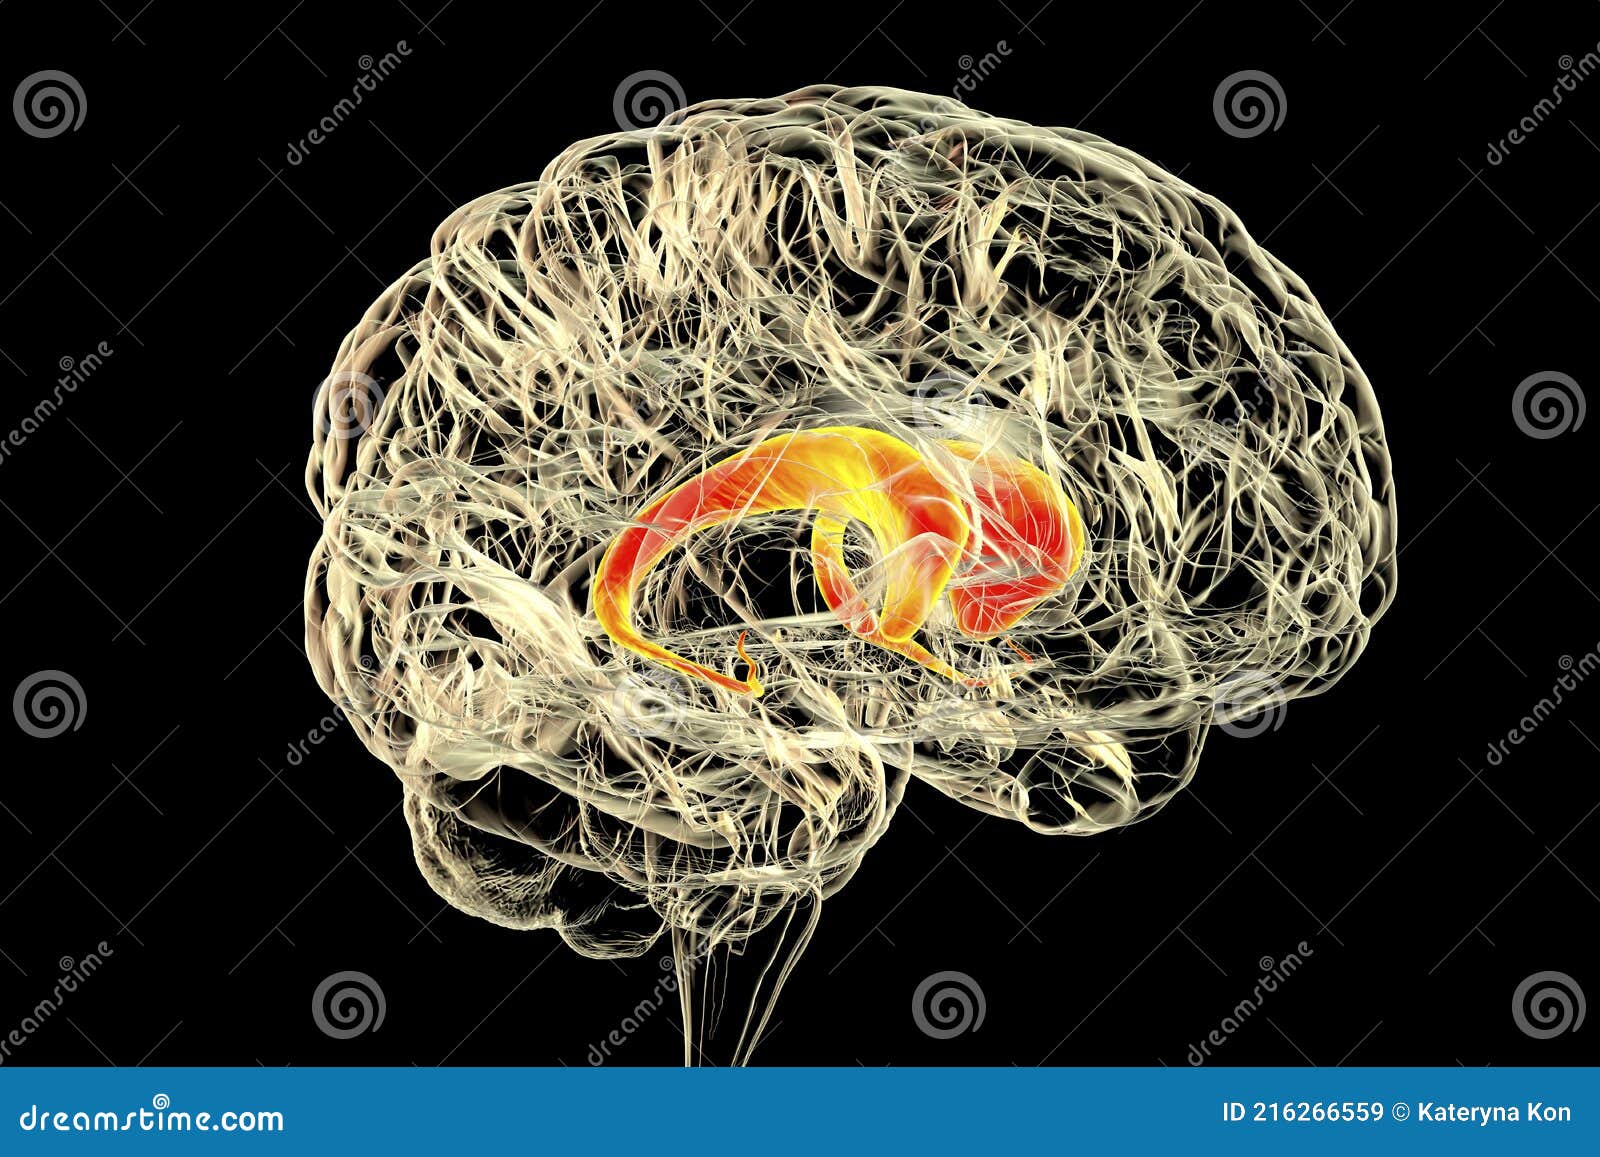 caudate nuclei highlighted in human brain, 3d 